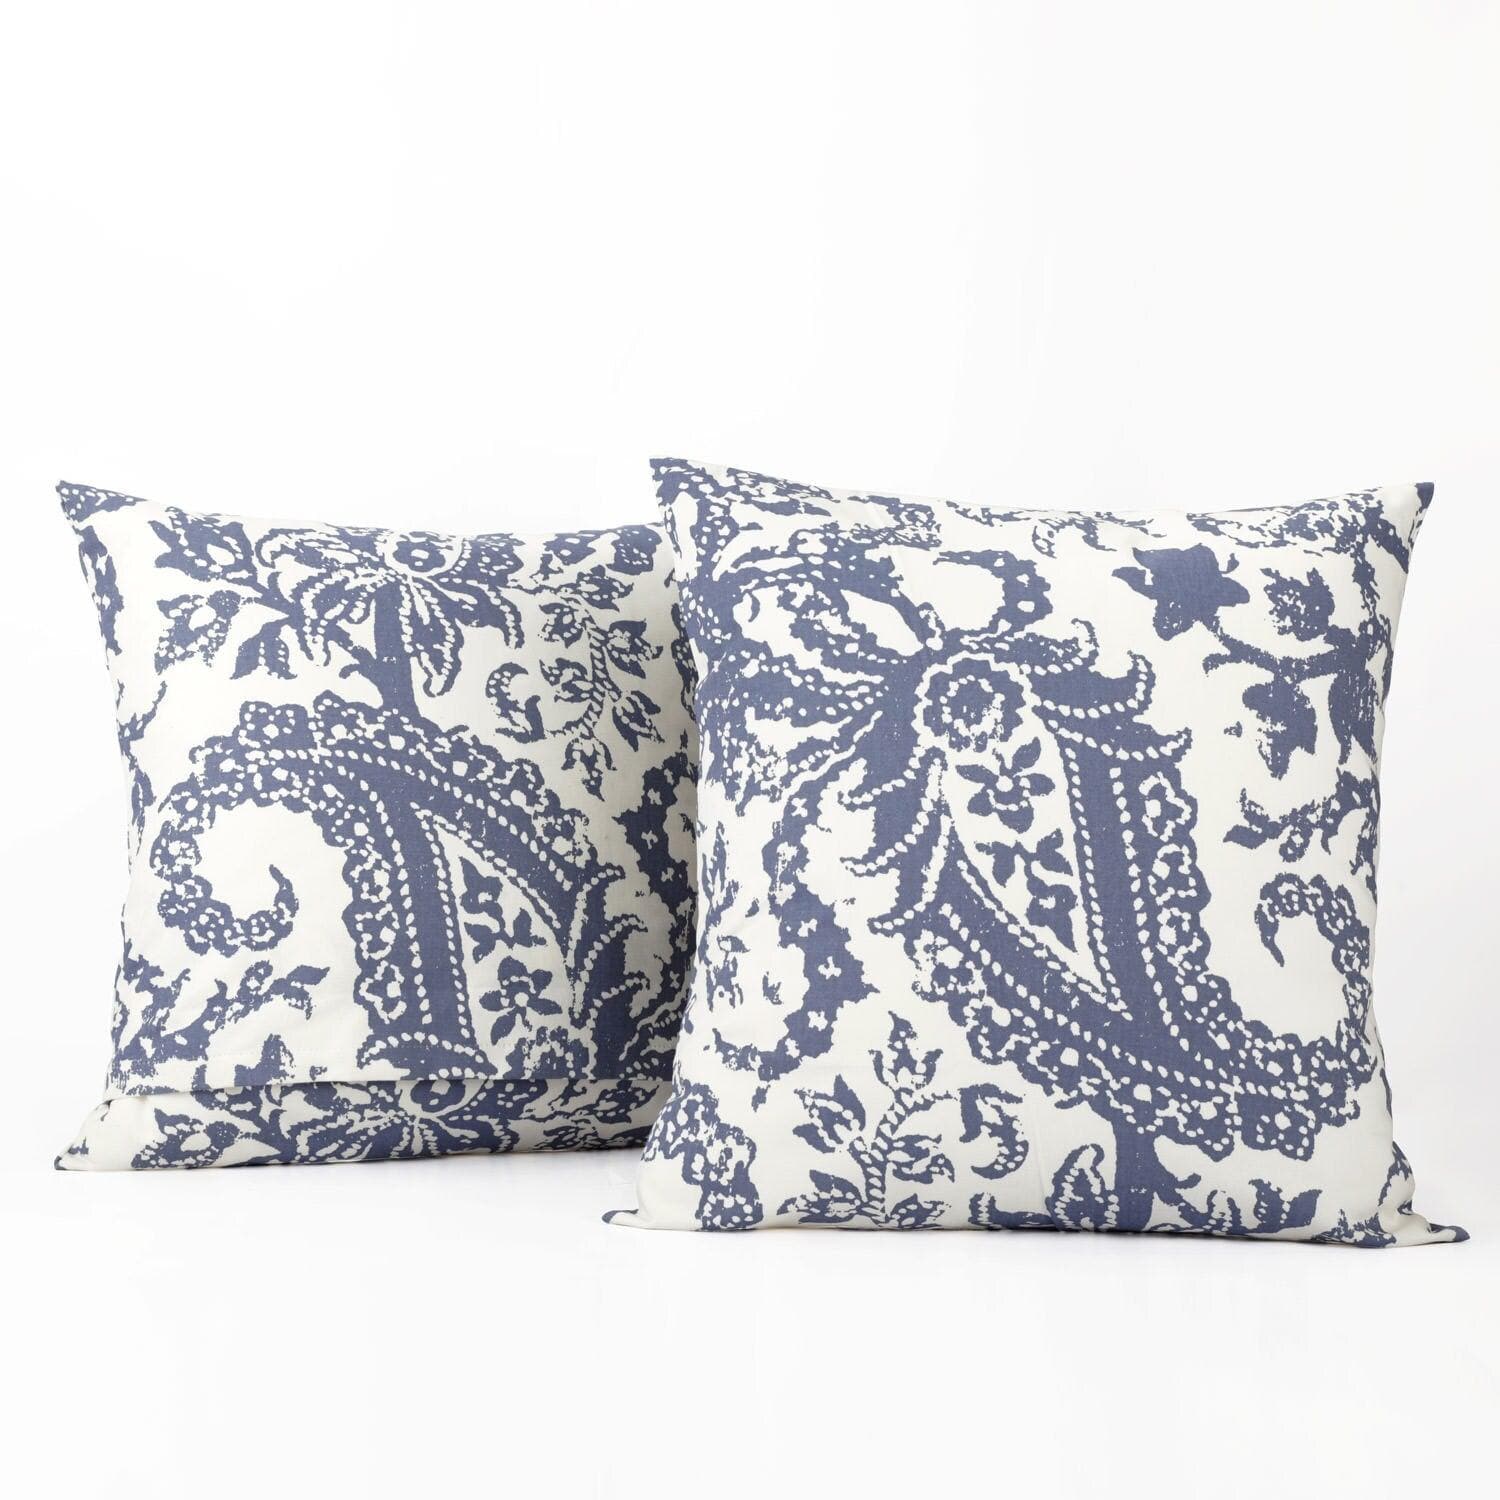 Edina Washed Blue Printed Cotton Cushion Covers - Pair